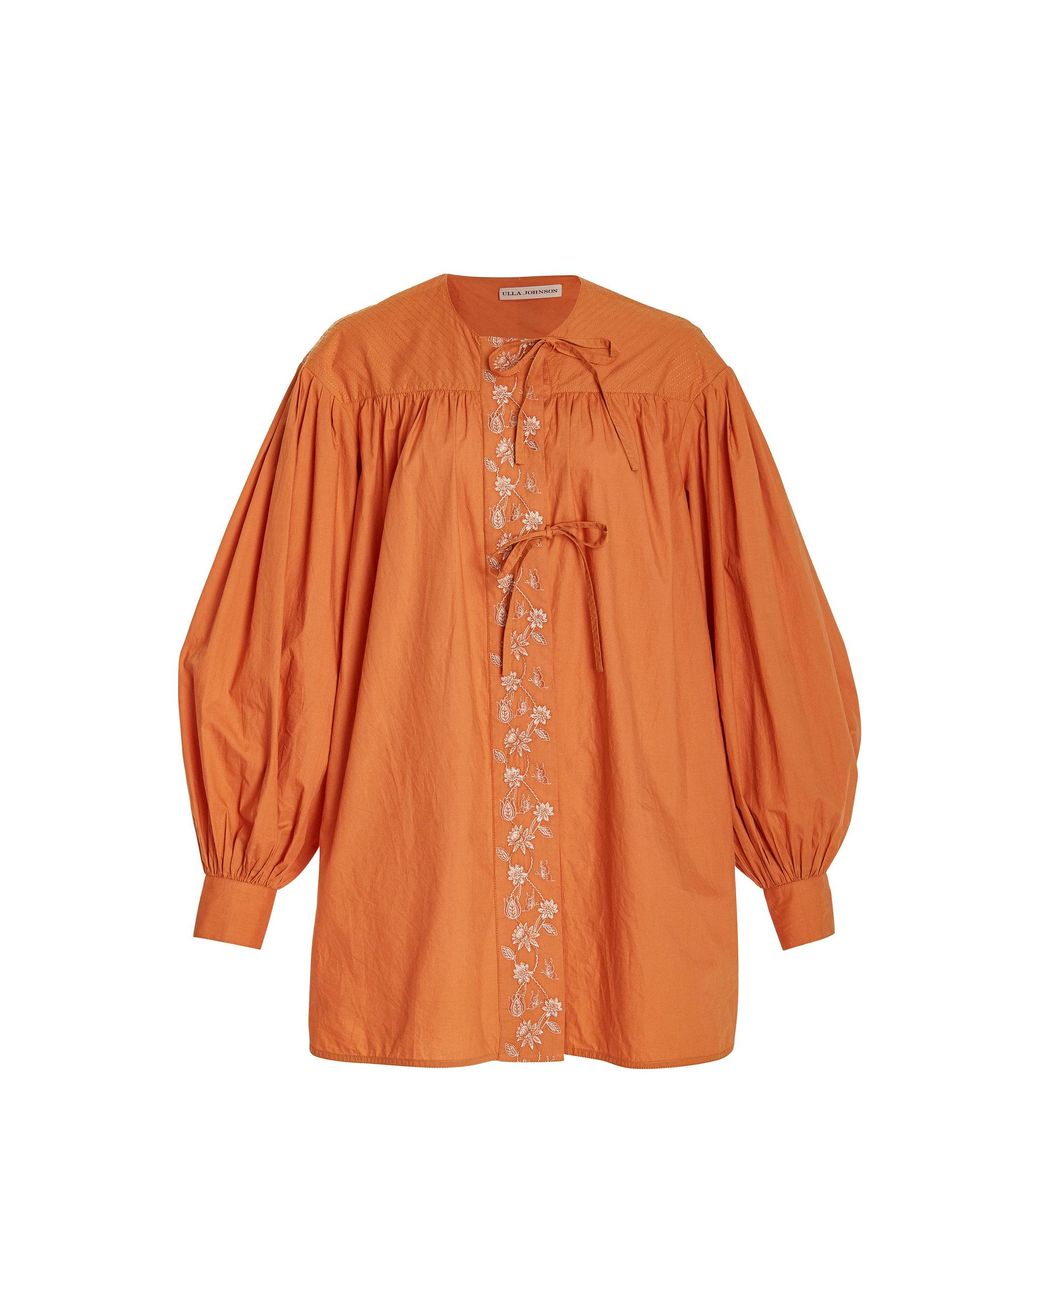 Ulla Johnson Scarlett Cotton Tunic Top in Orange | Lyst